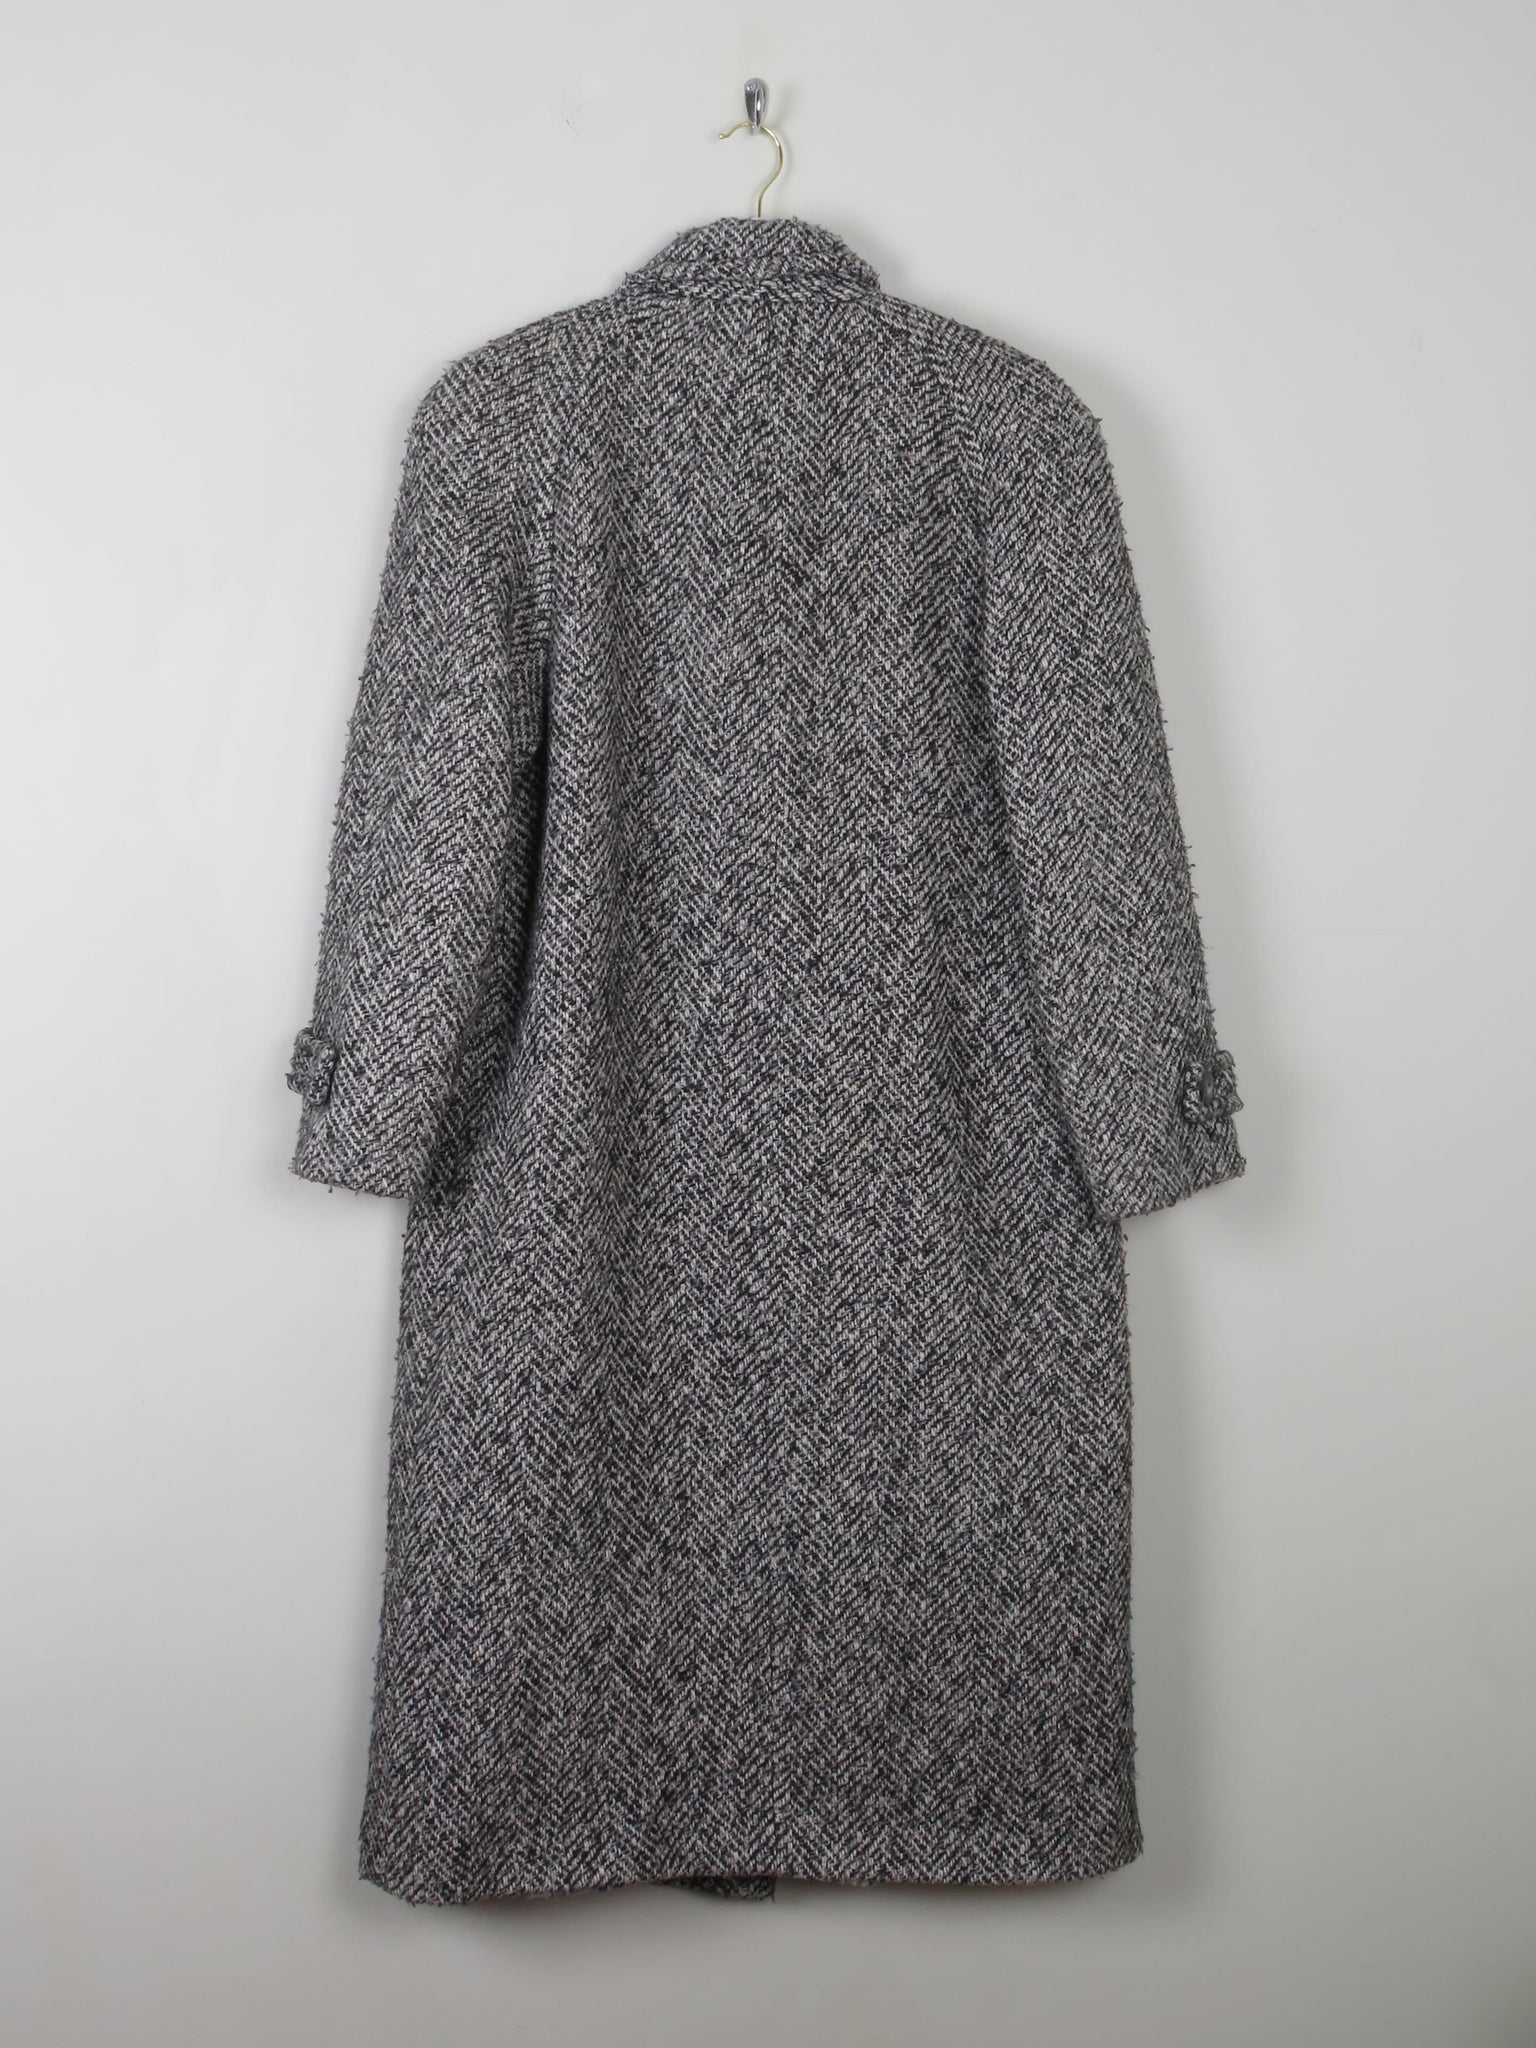 Women's Vintage Tweed Coat Black & White M/L - The Harlequin